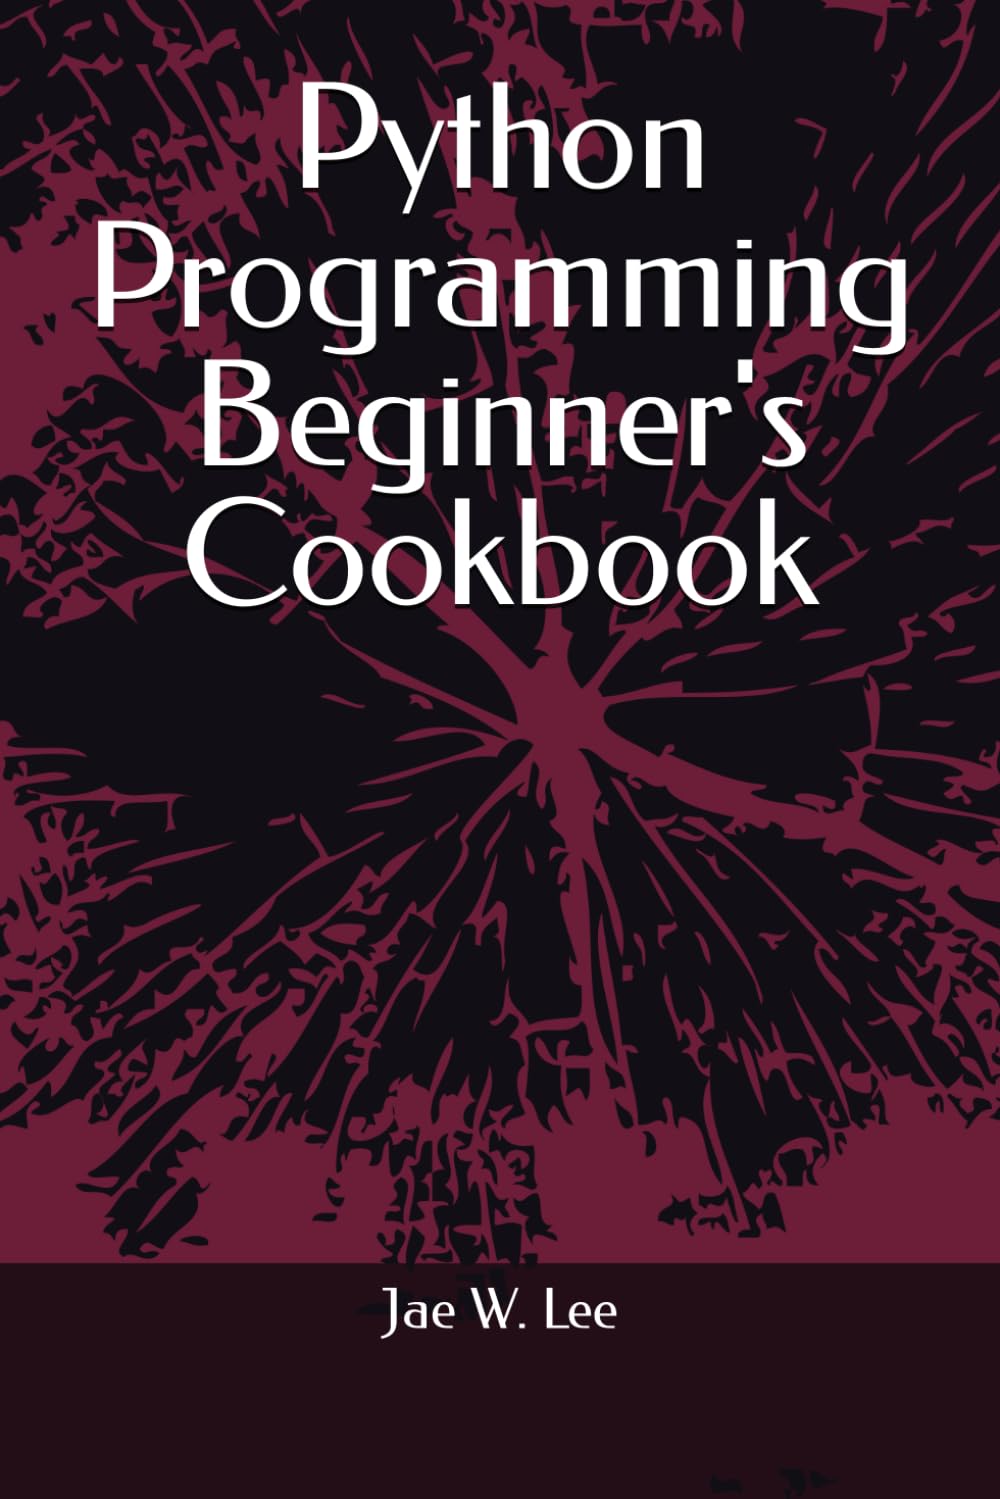 Python Programming Beginner's Cookbook